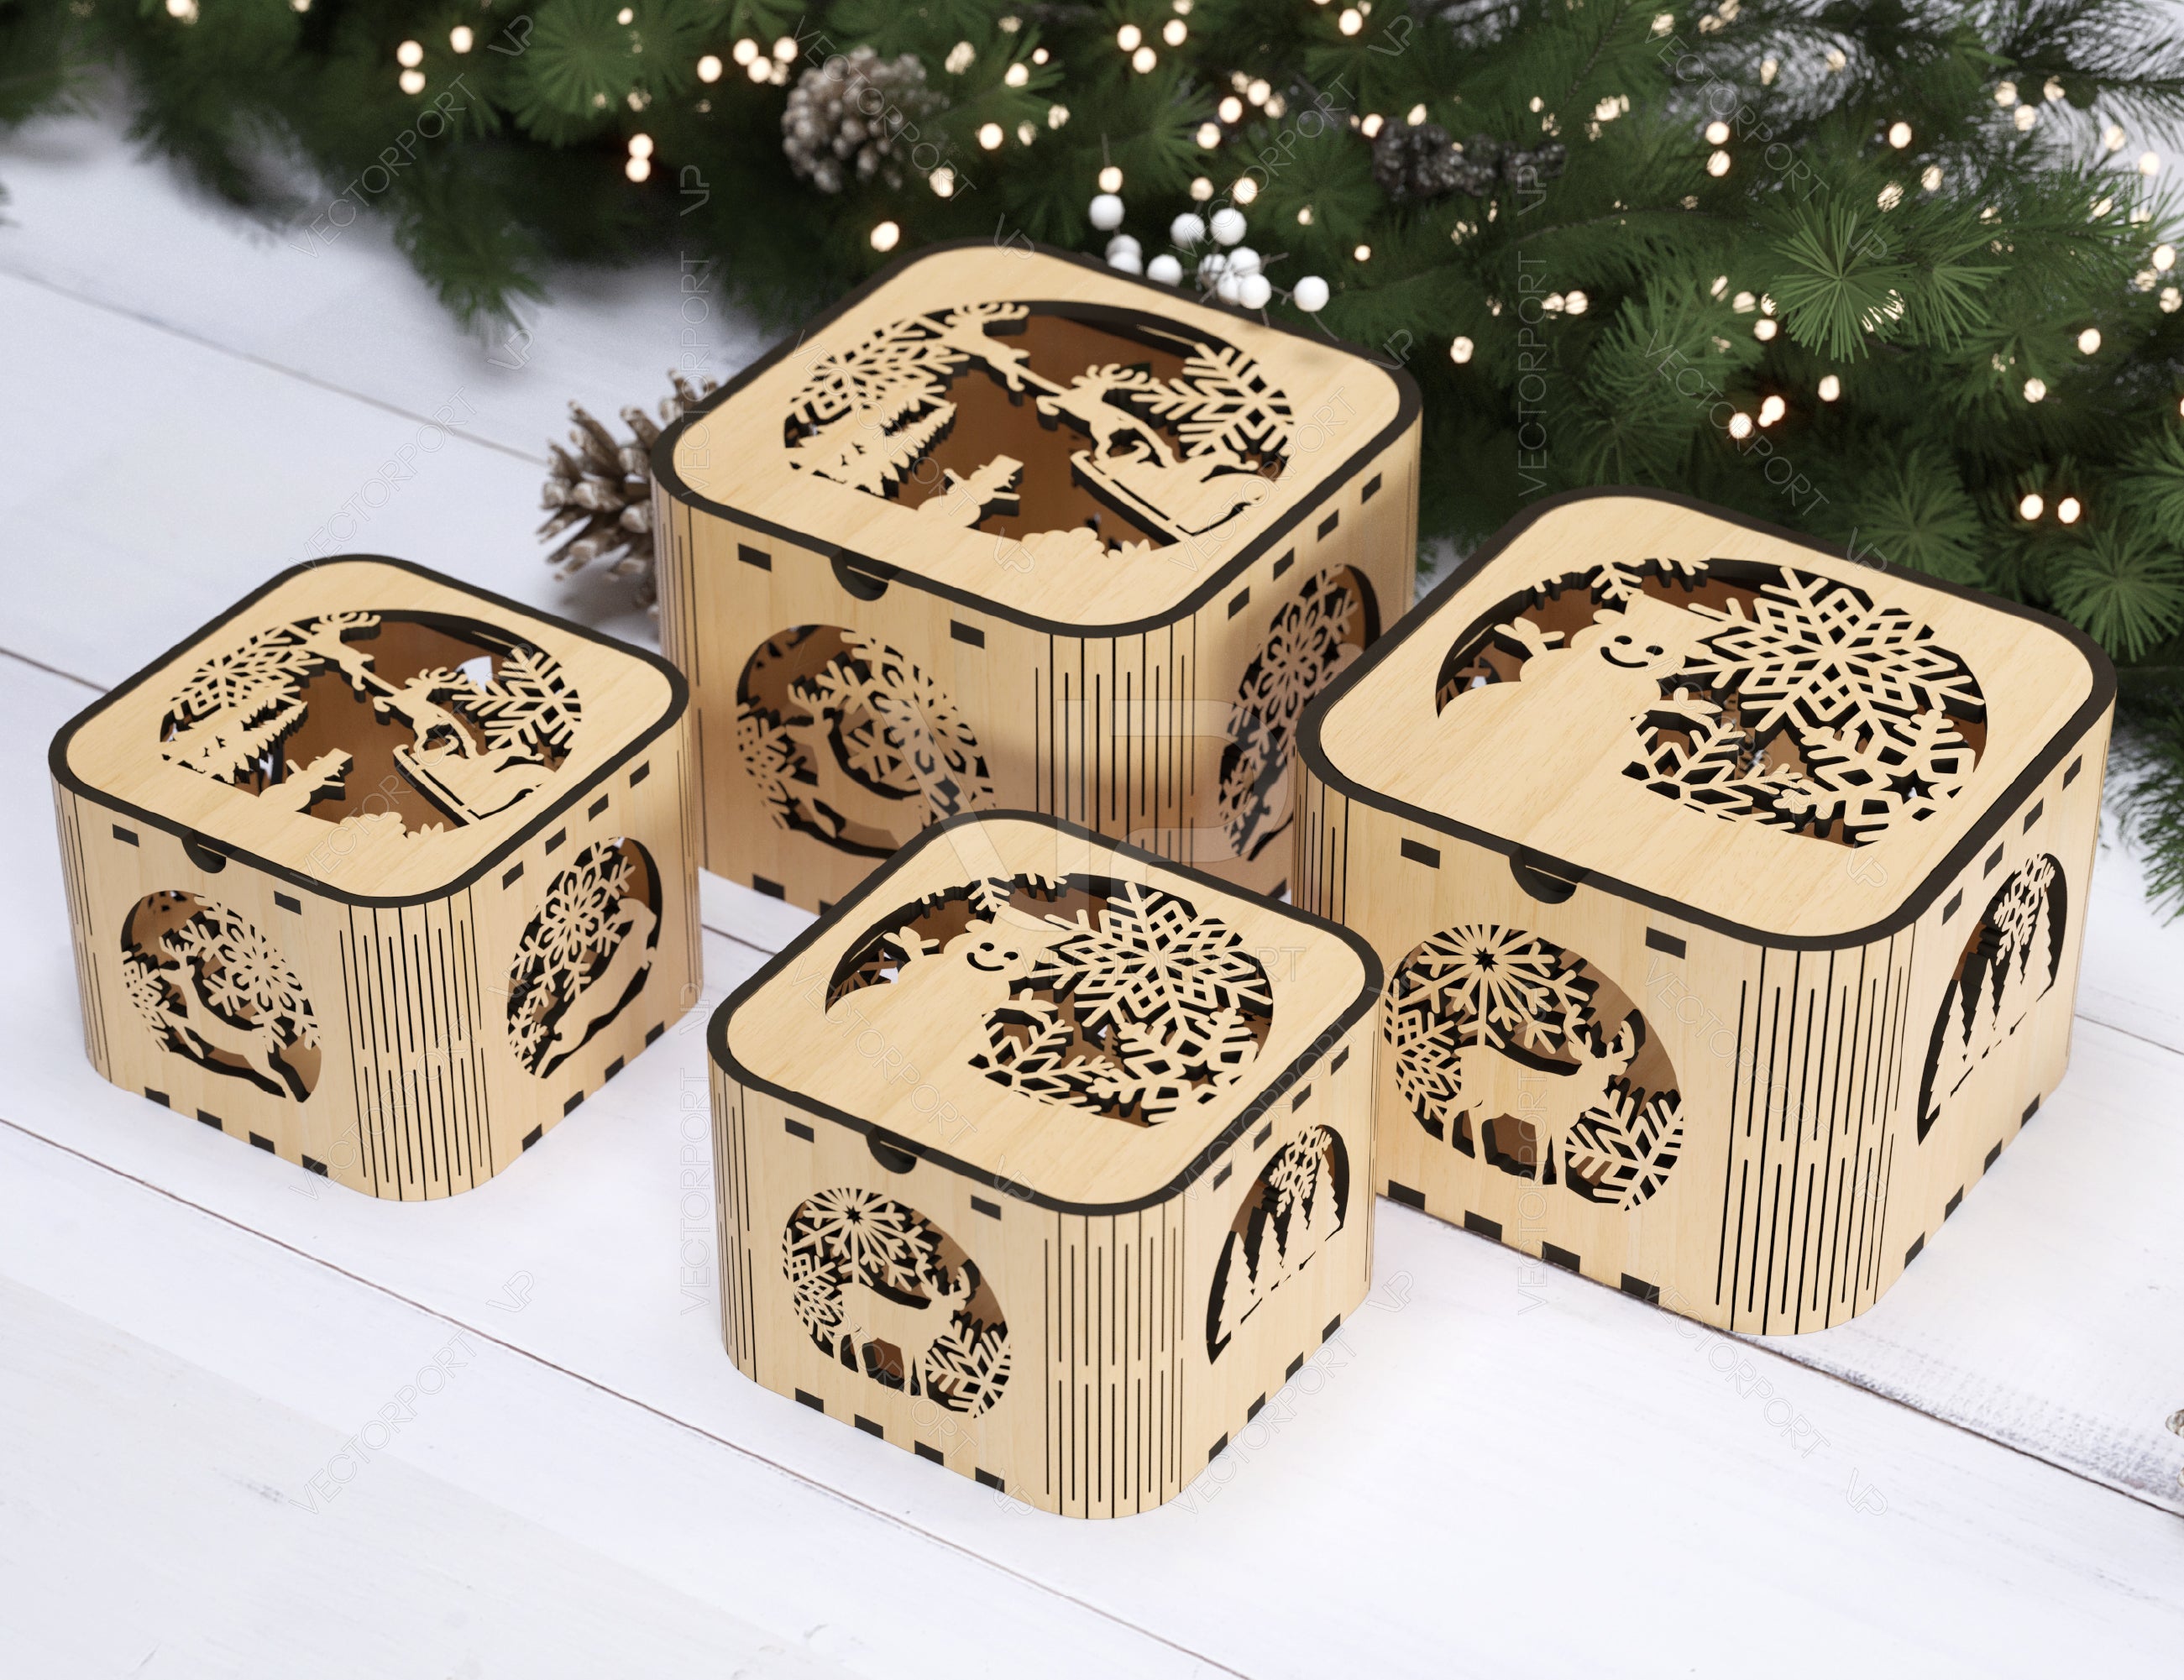 Christmas Template Decorative Box Wooden New Year Gift Box laser cut Jeweler Case Digital Download |#U320|